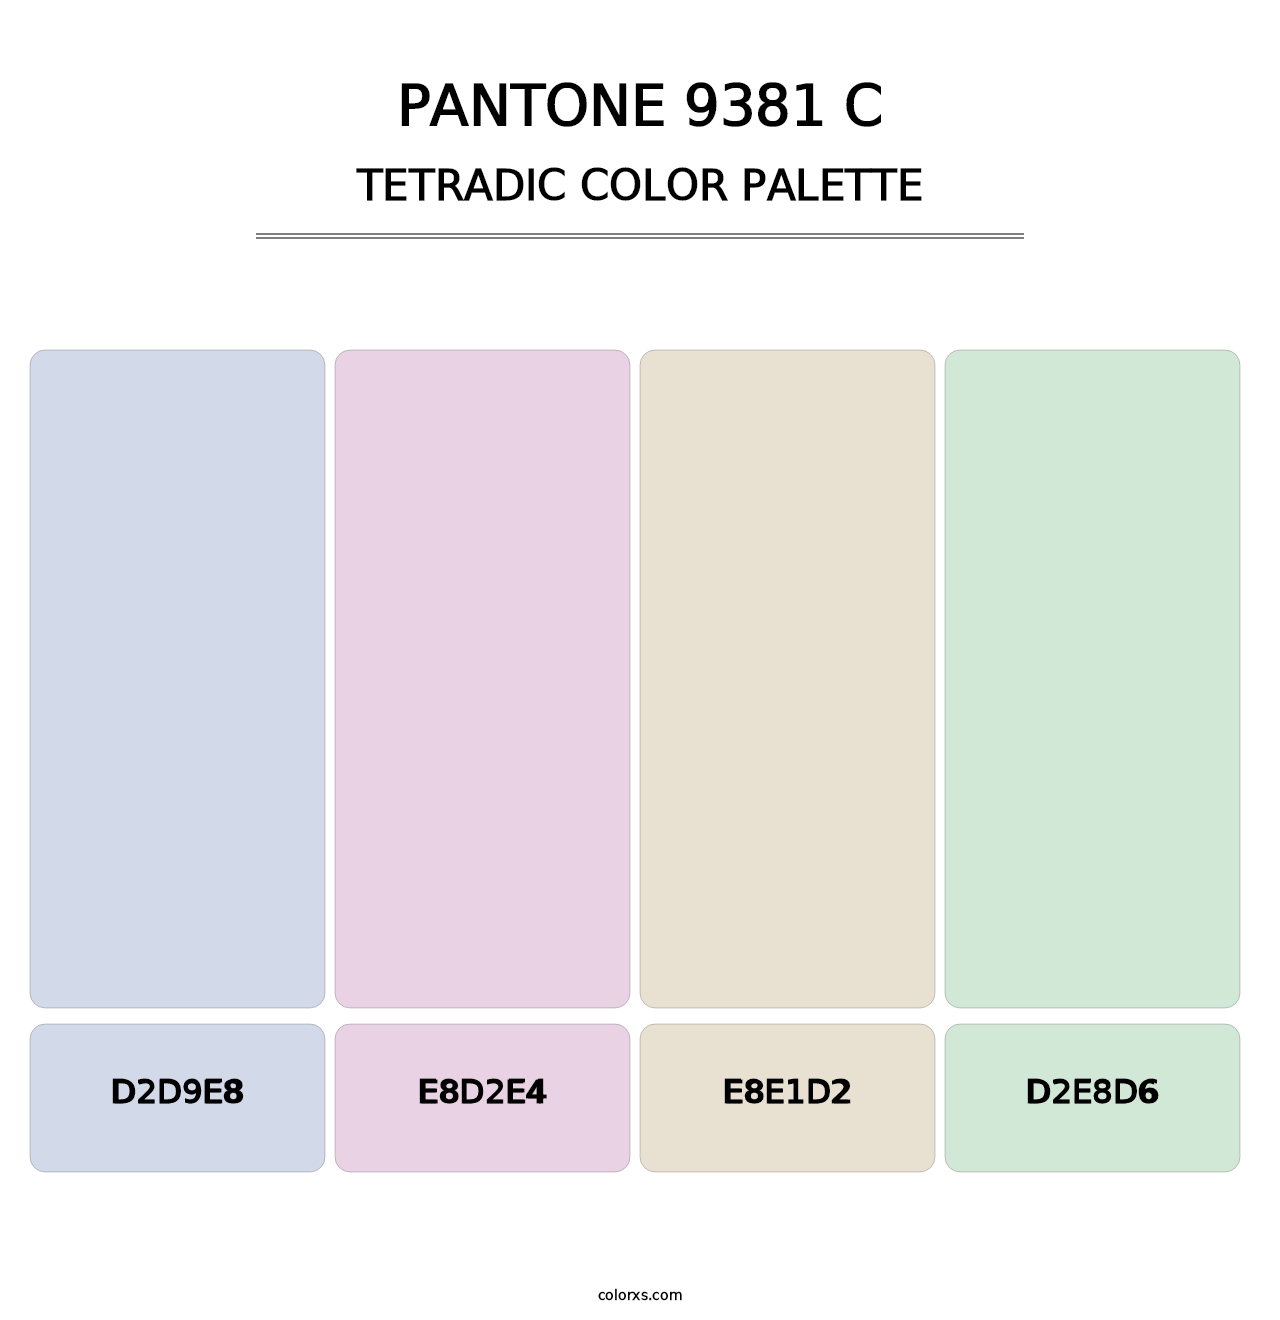 PANTONE 9381 C - Tetradic Color Palette